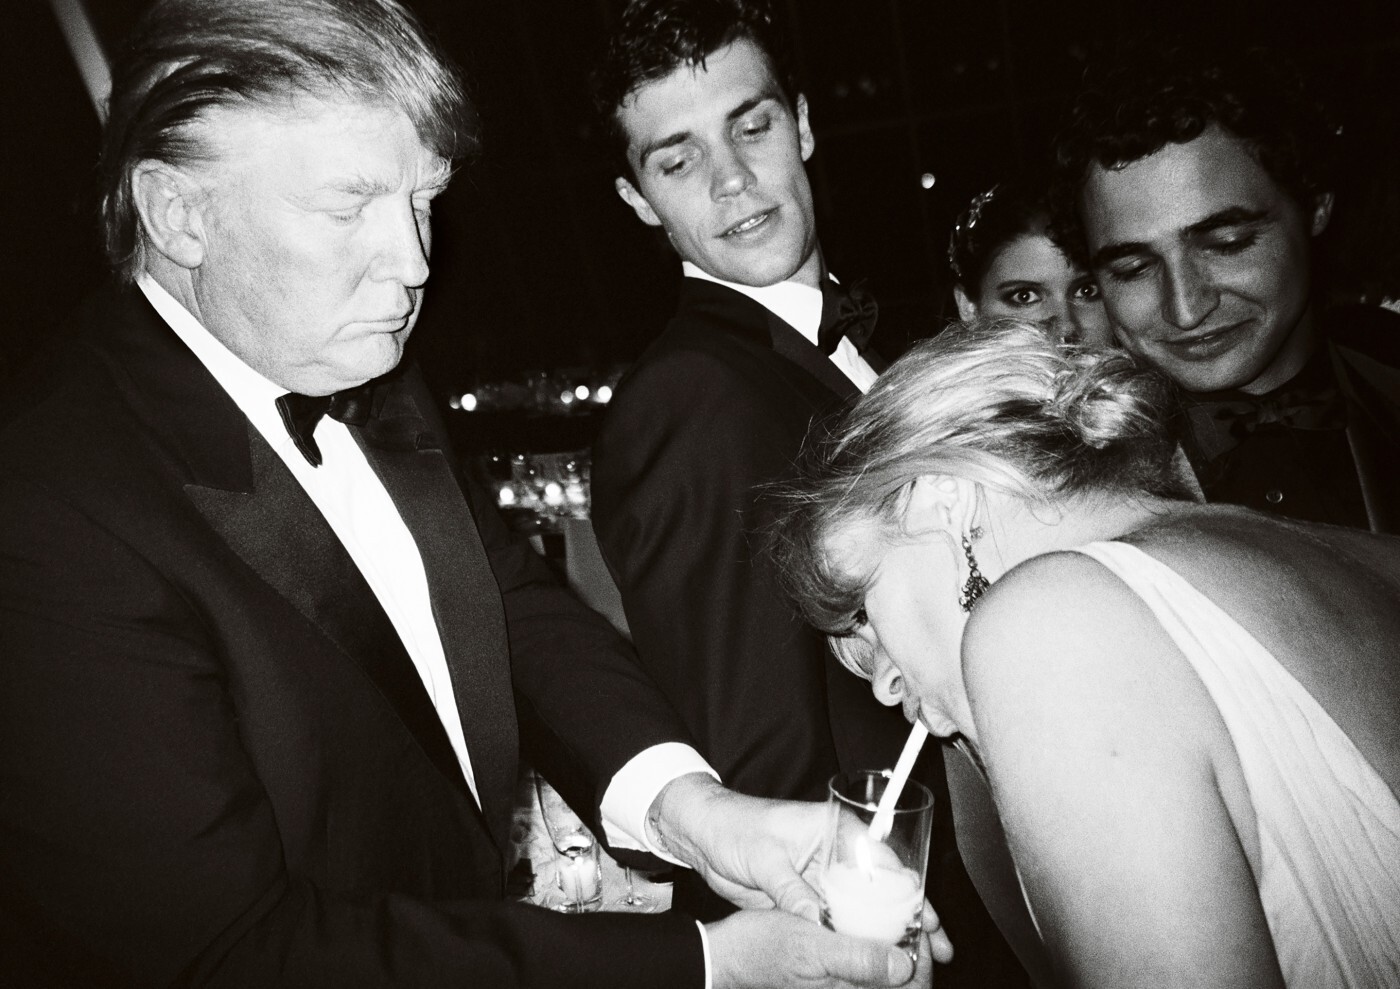 Дональд Трамп, Кейт Мосс, Зак Позен и Роберто Болле. Нью-Йорк, 2008. Фотограф Марио Тестино